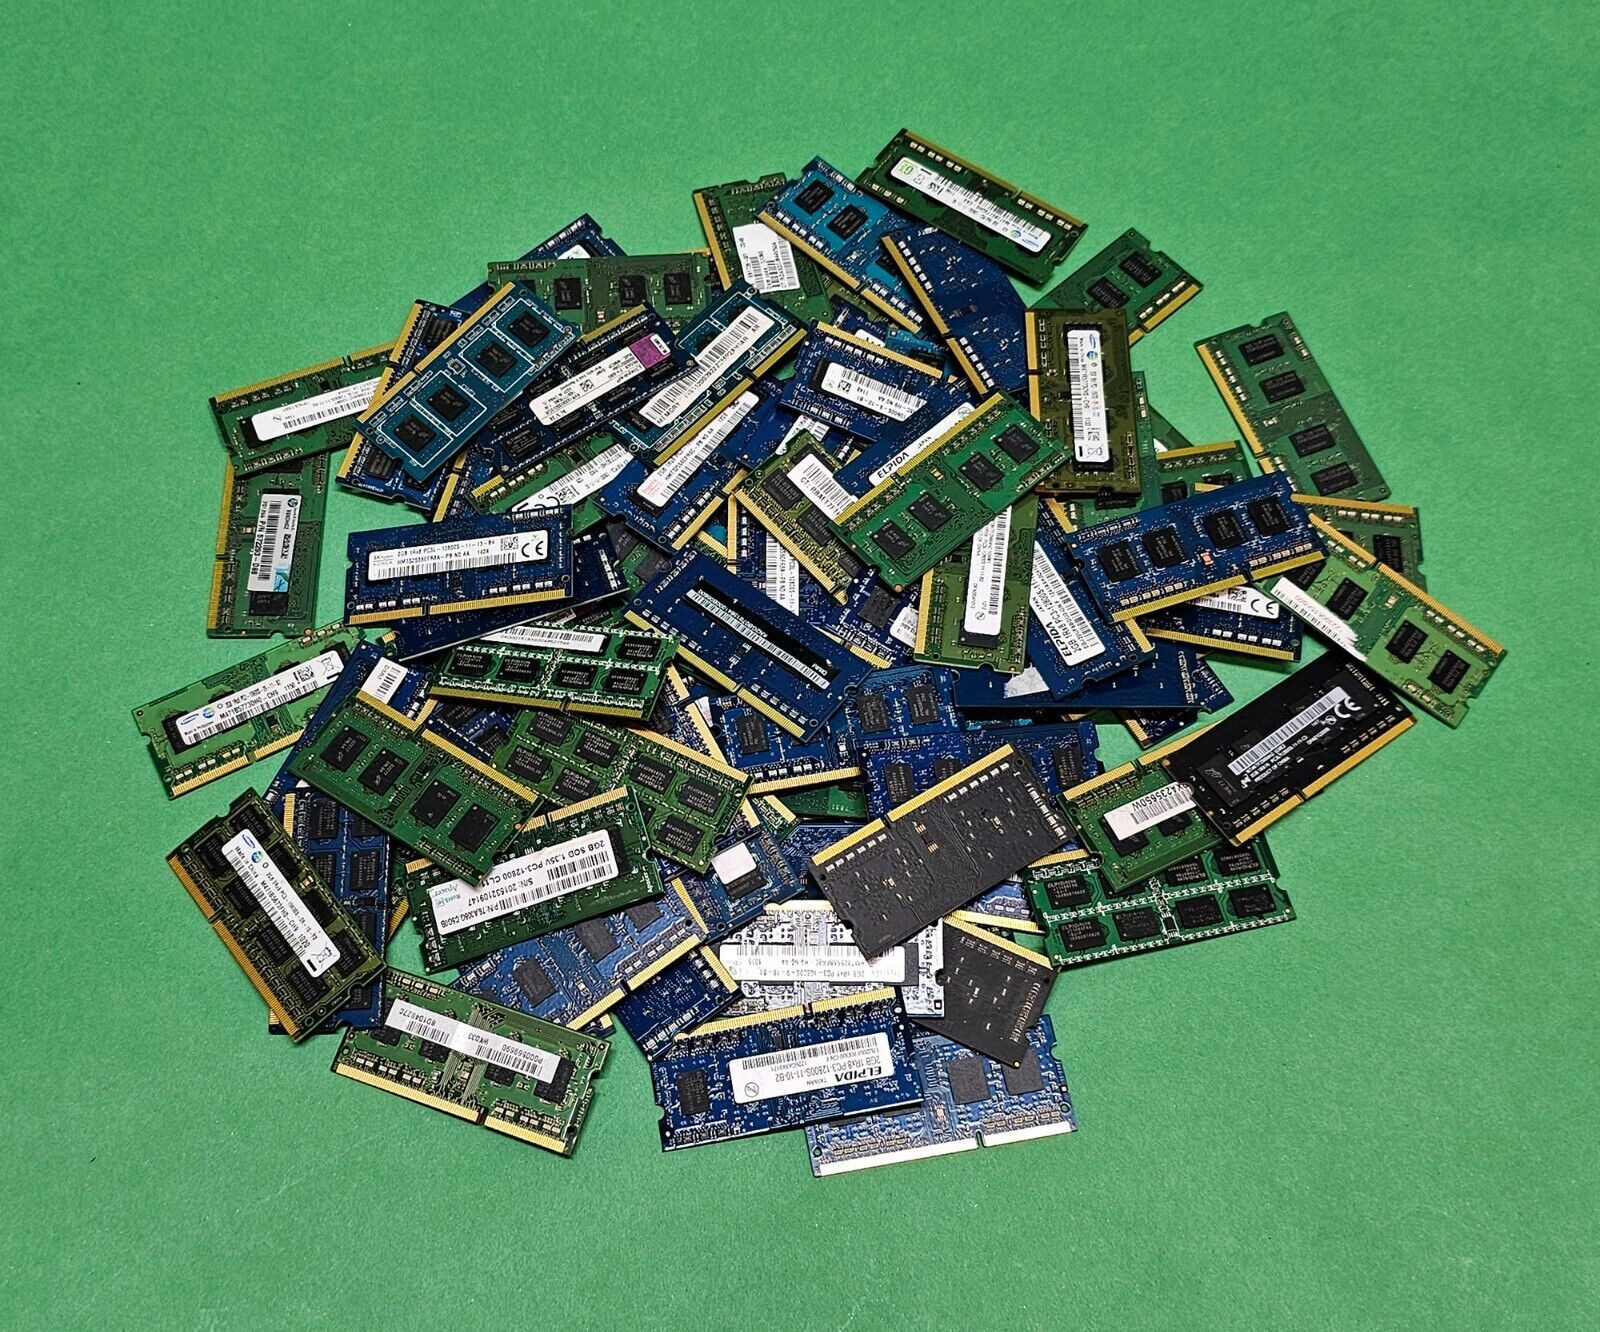 Mixed Lot of 85 PC 2GB DDR3 Laptop RAM Memory Modules